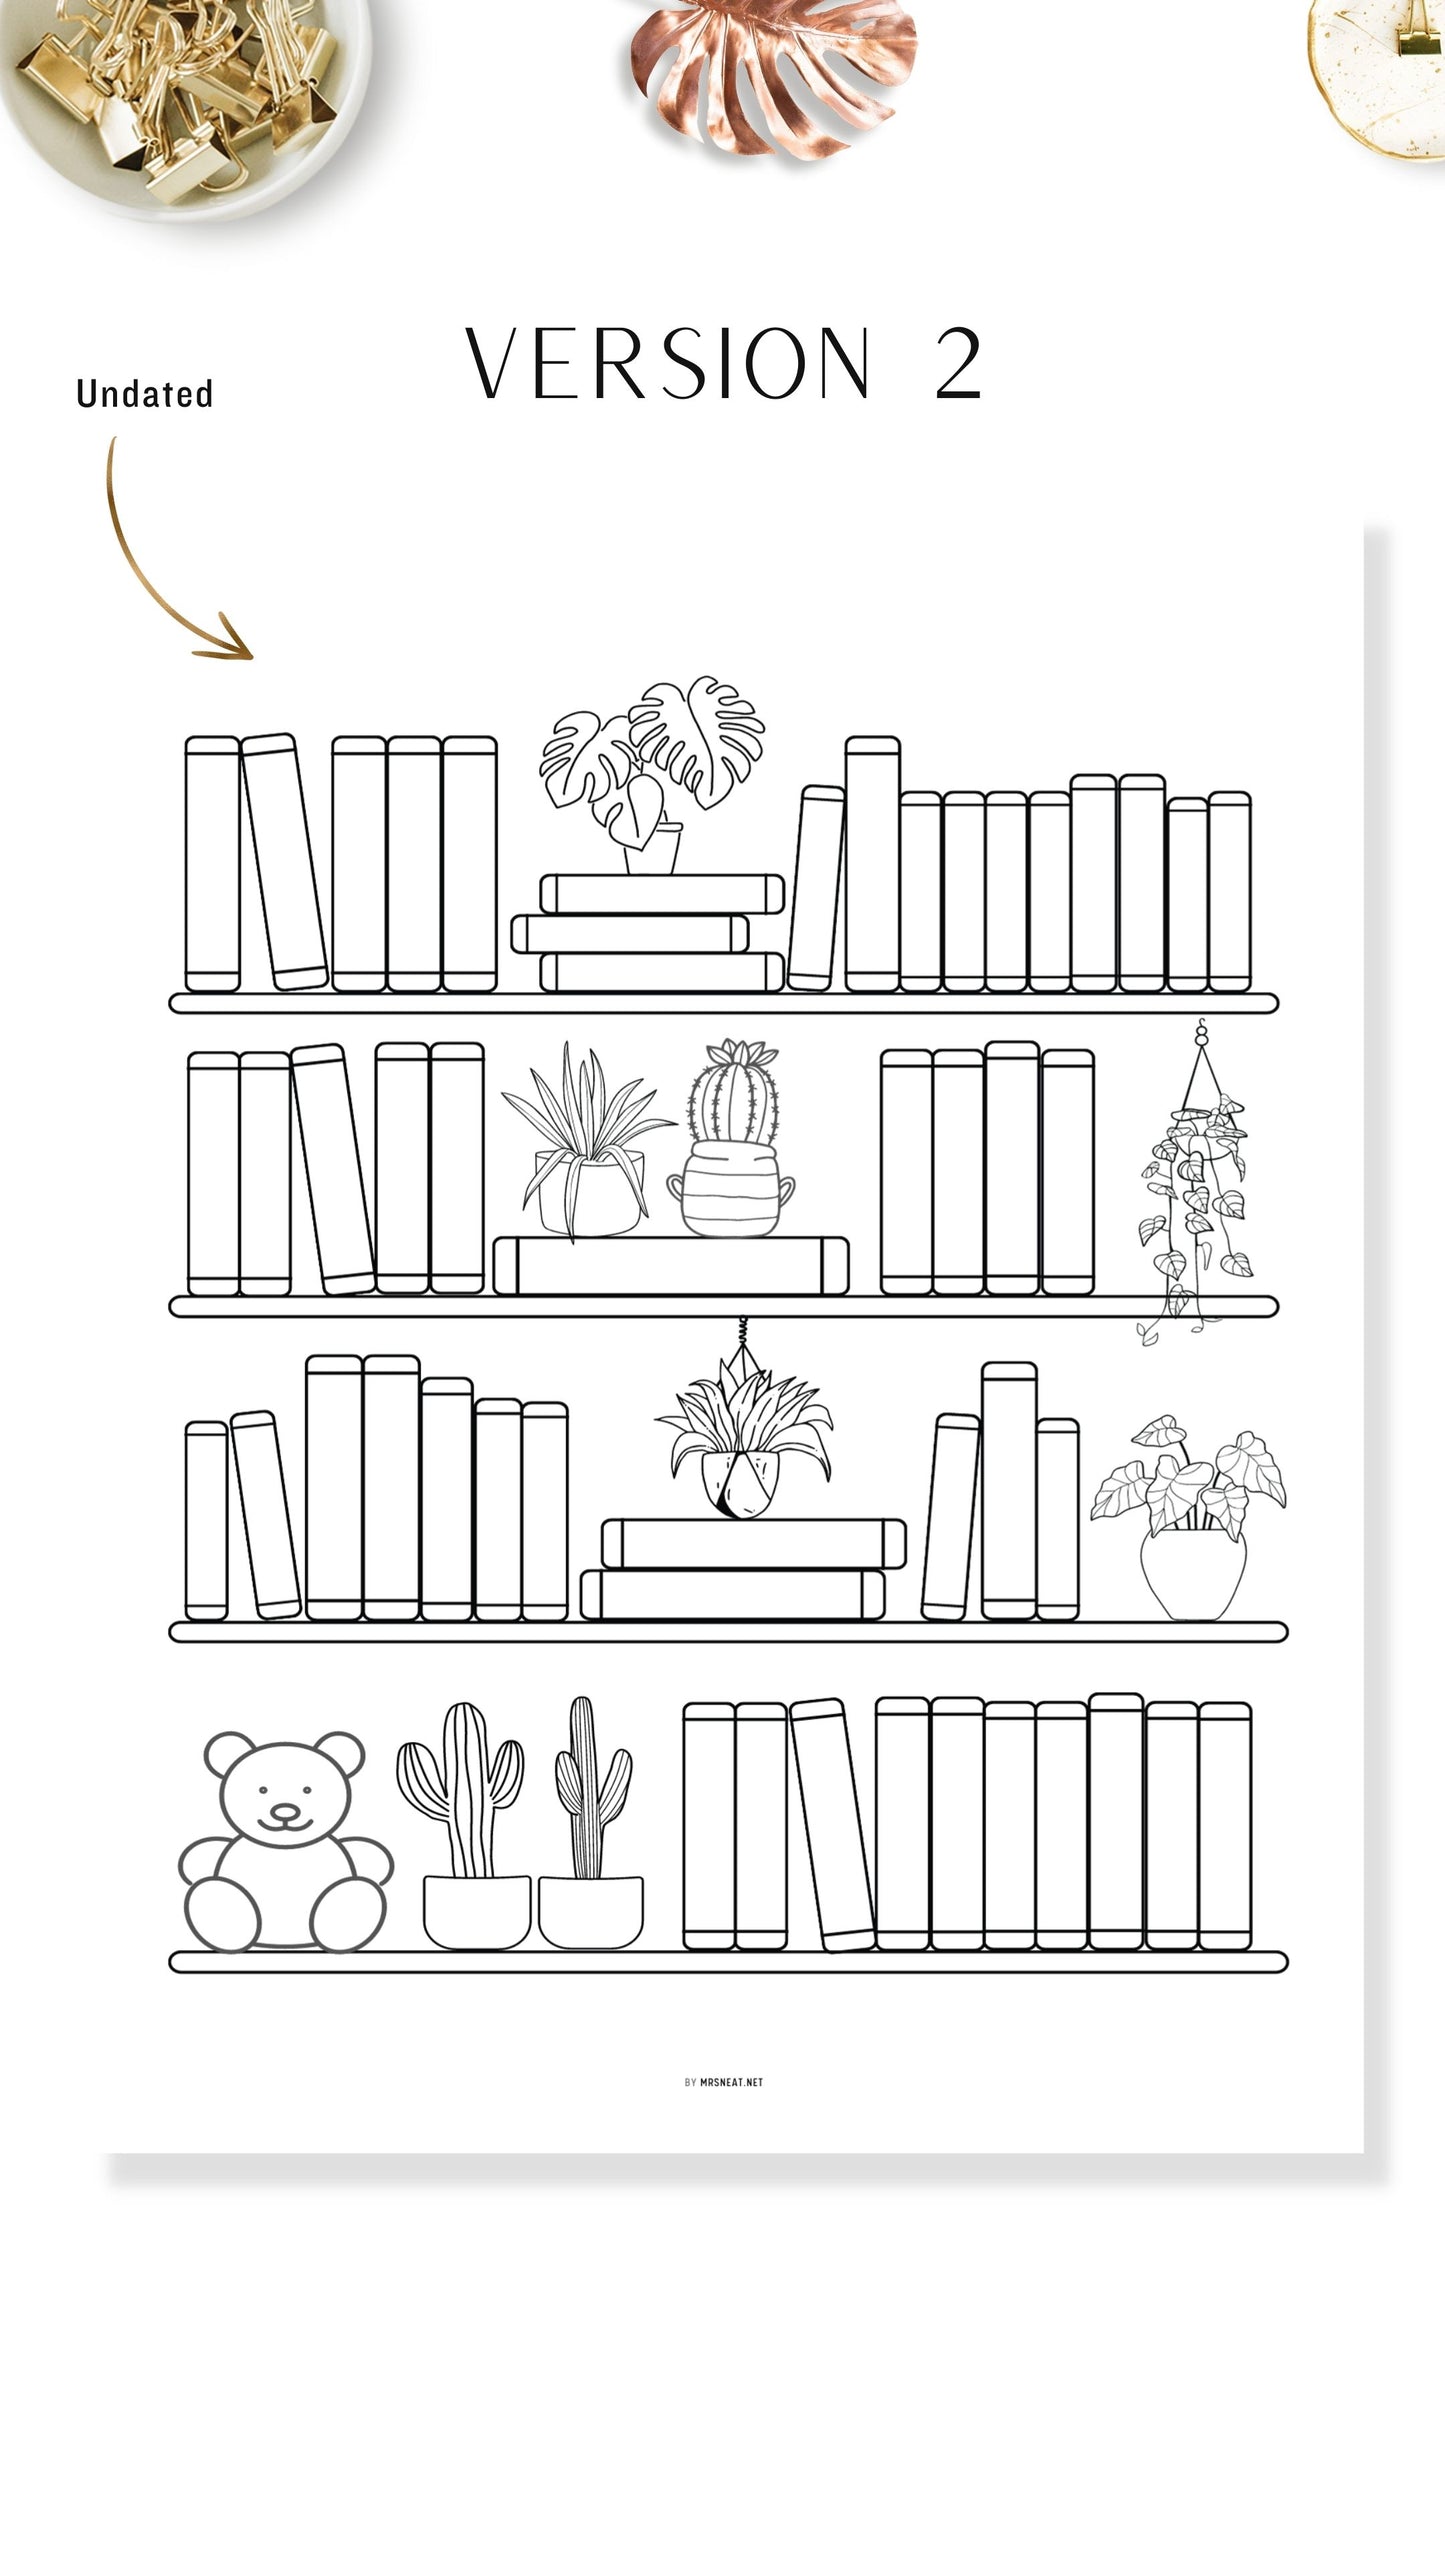 Undated Bookshelf Reading Tracker Printable - 50 Books